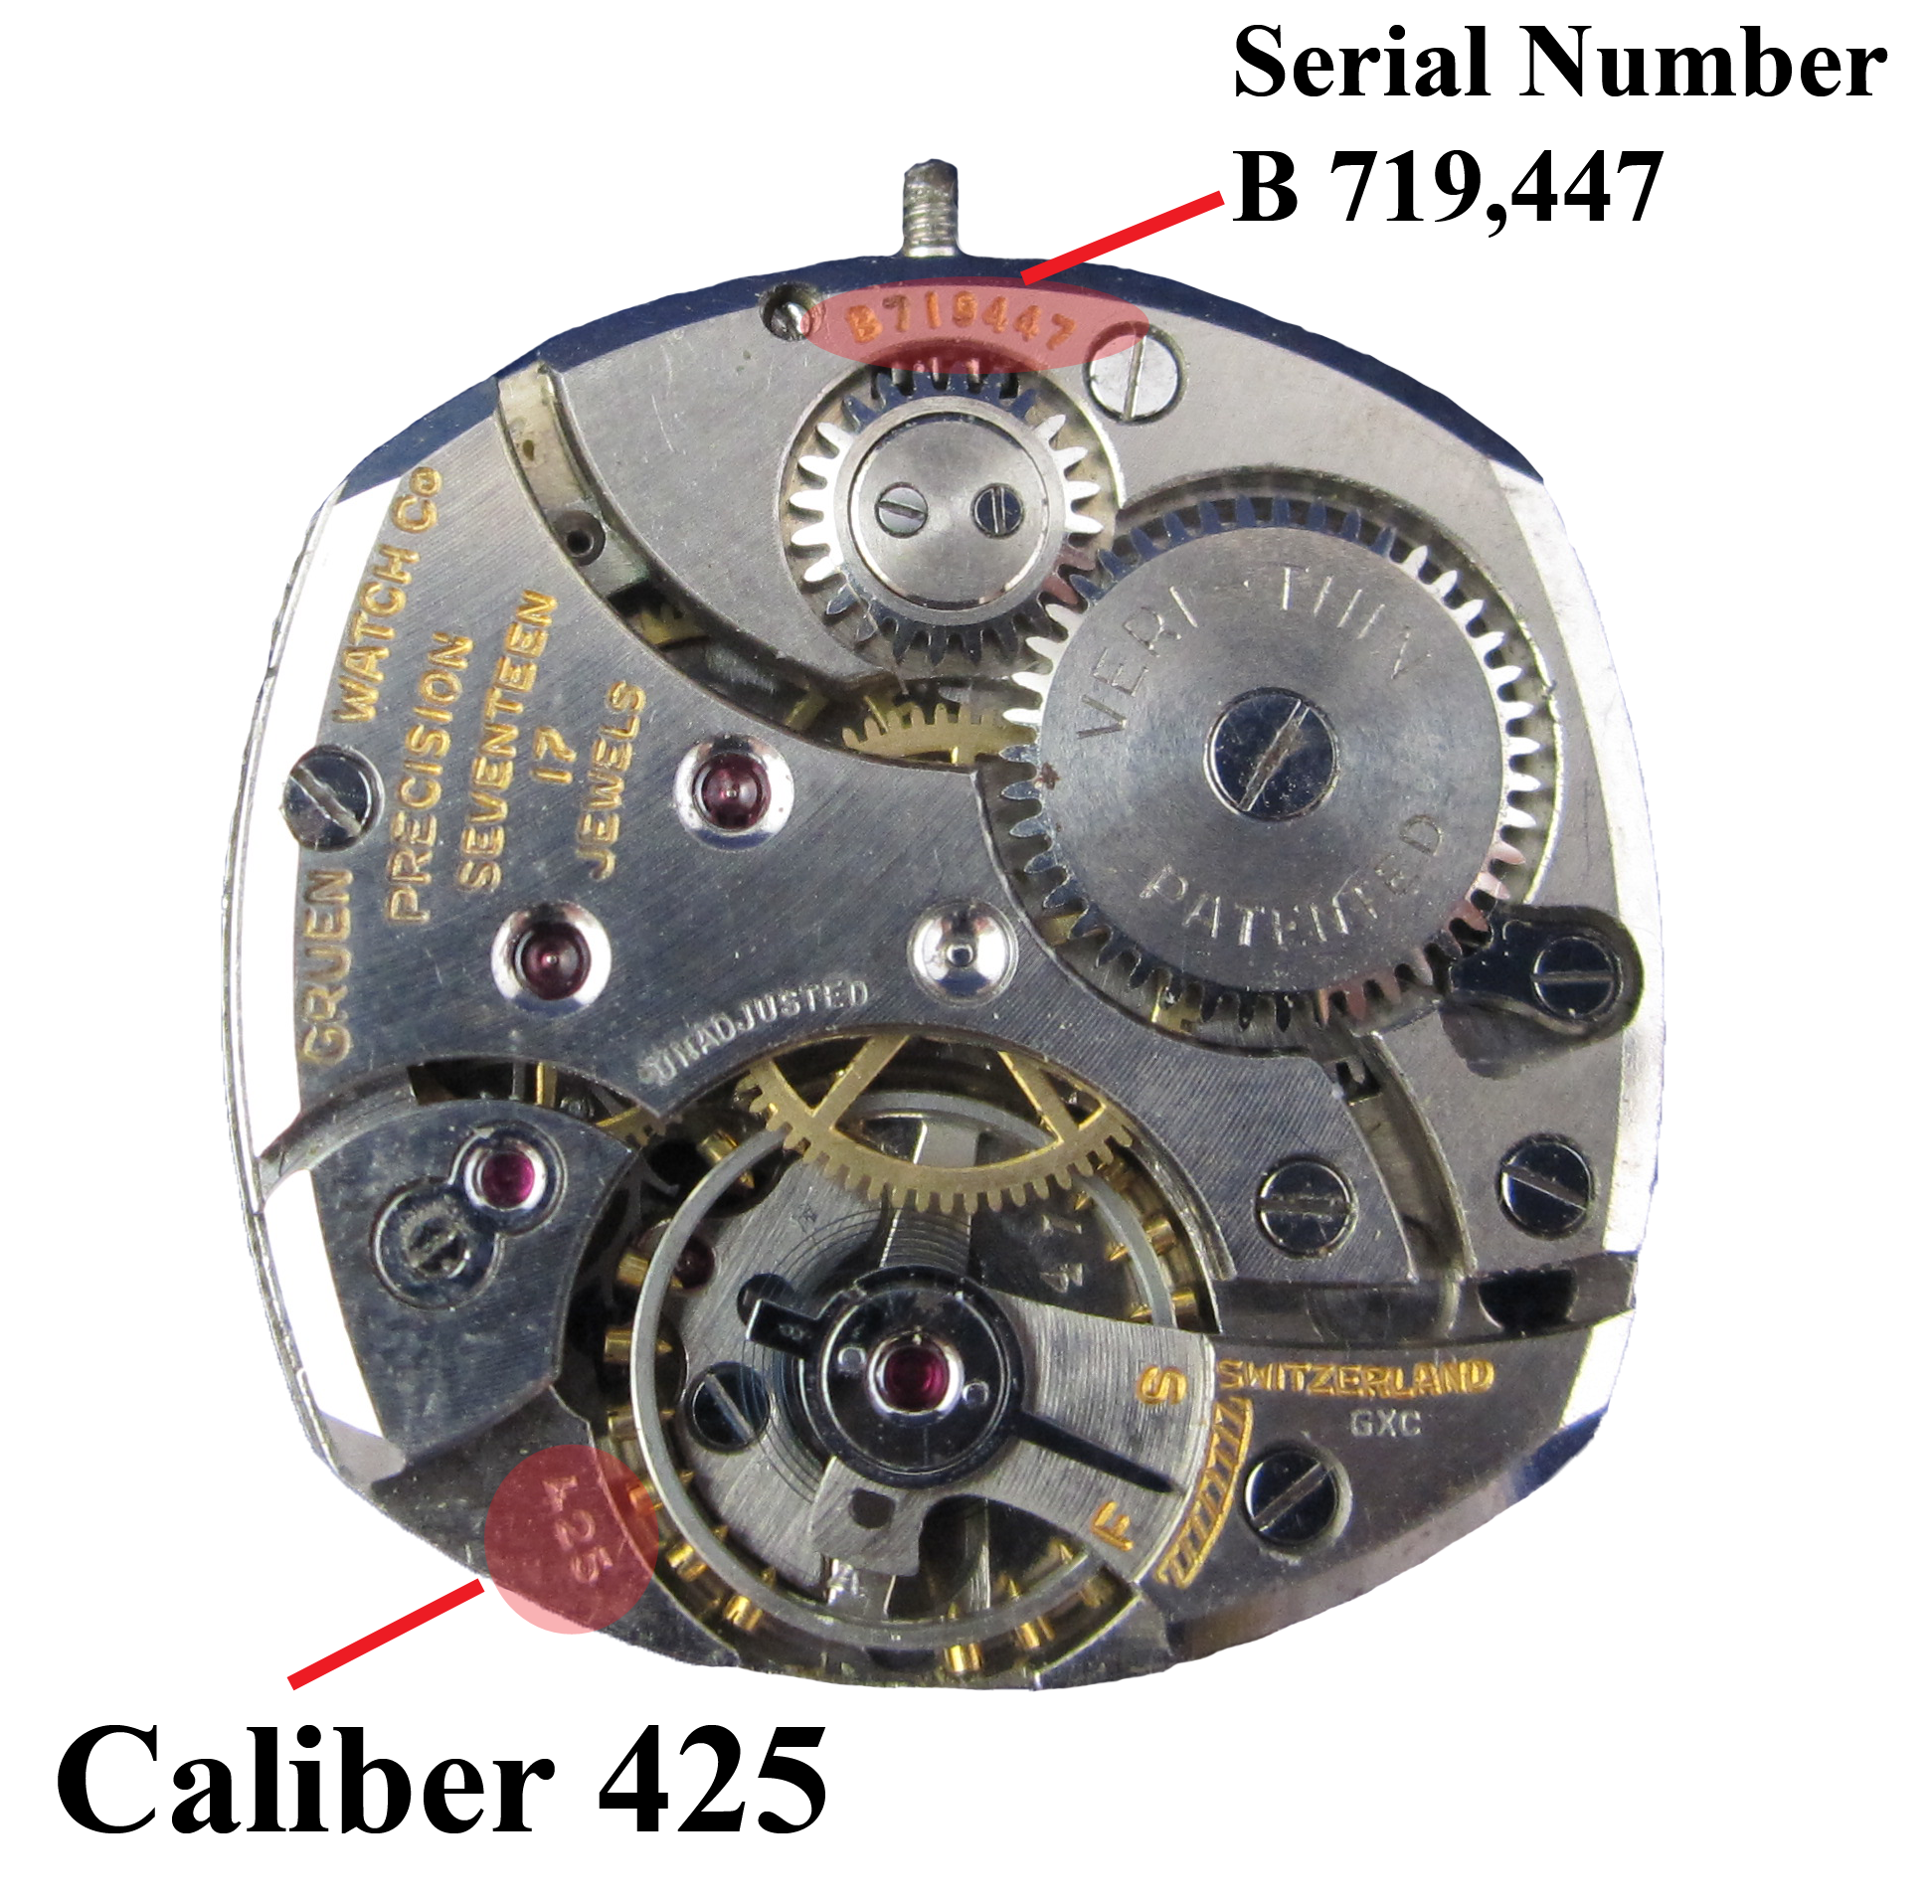 movado watch serial numbers